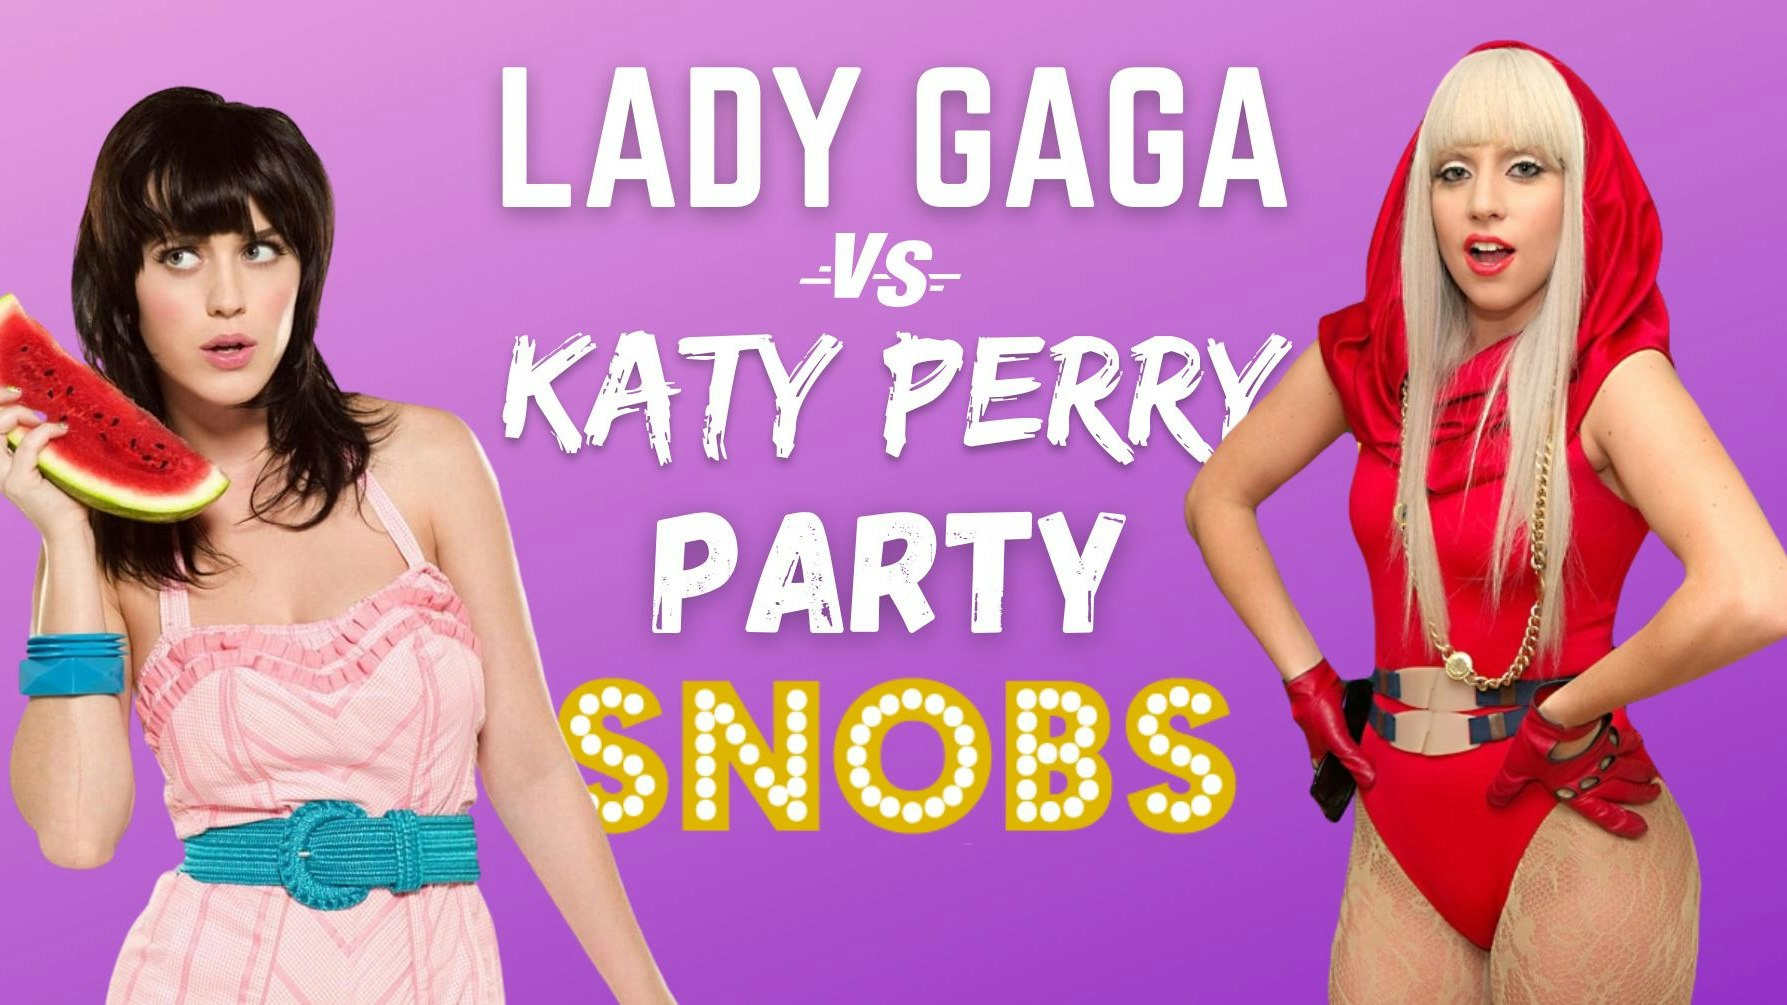 Lady Gaga vs Katy Perry Party – FRI 26th Aug